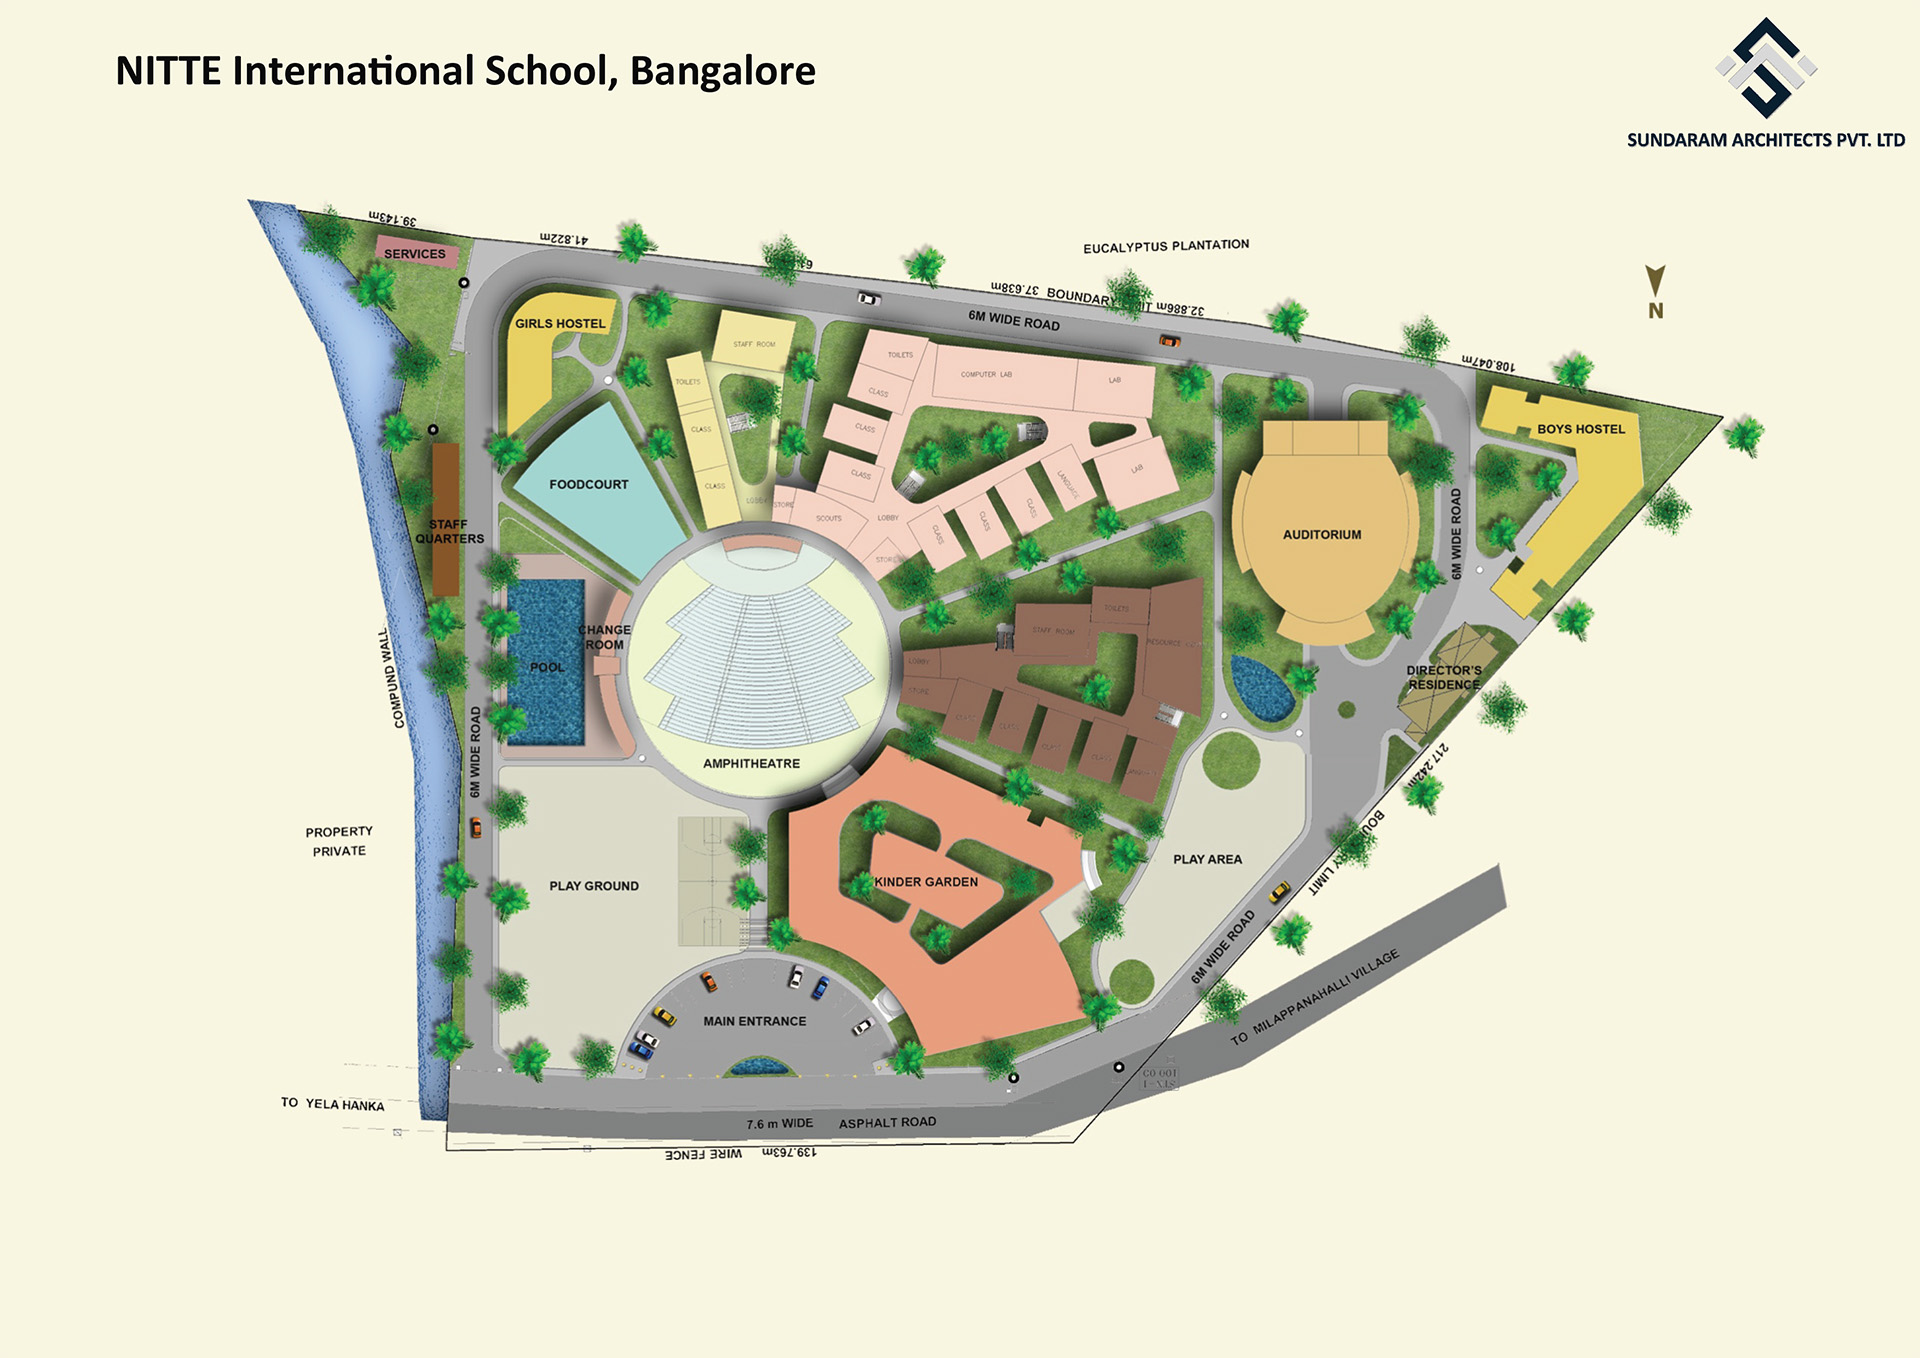 Sundaram Architects designed Master Plan of the NITTE International School, Bangalore